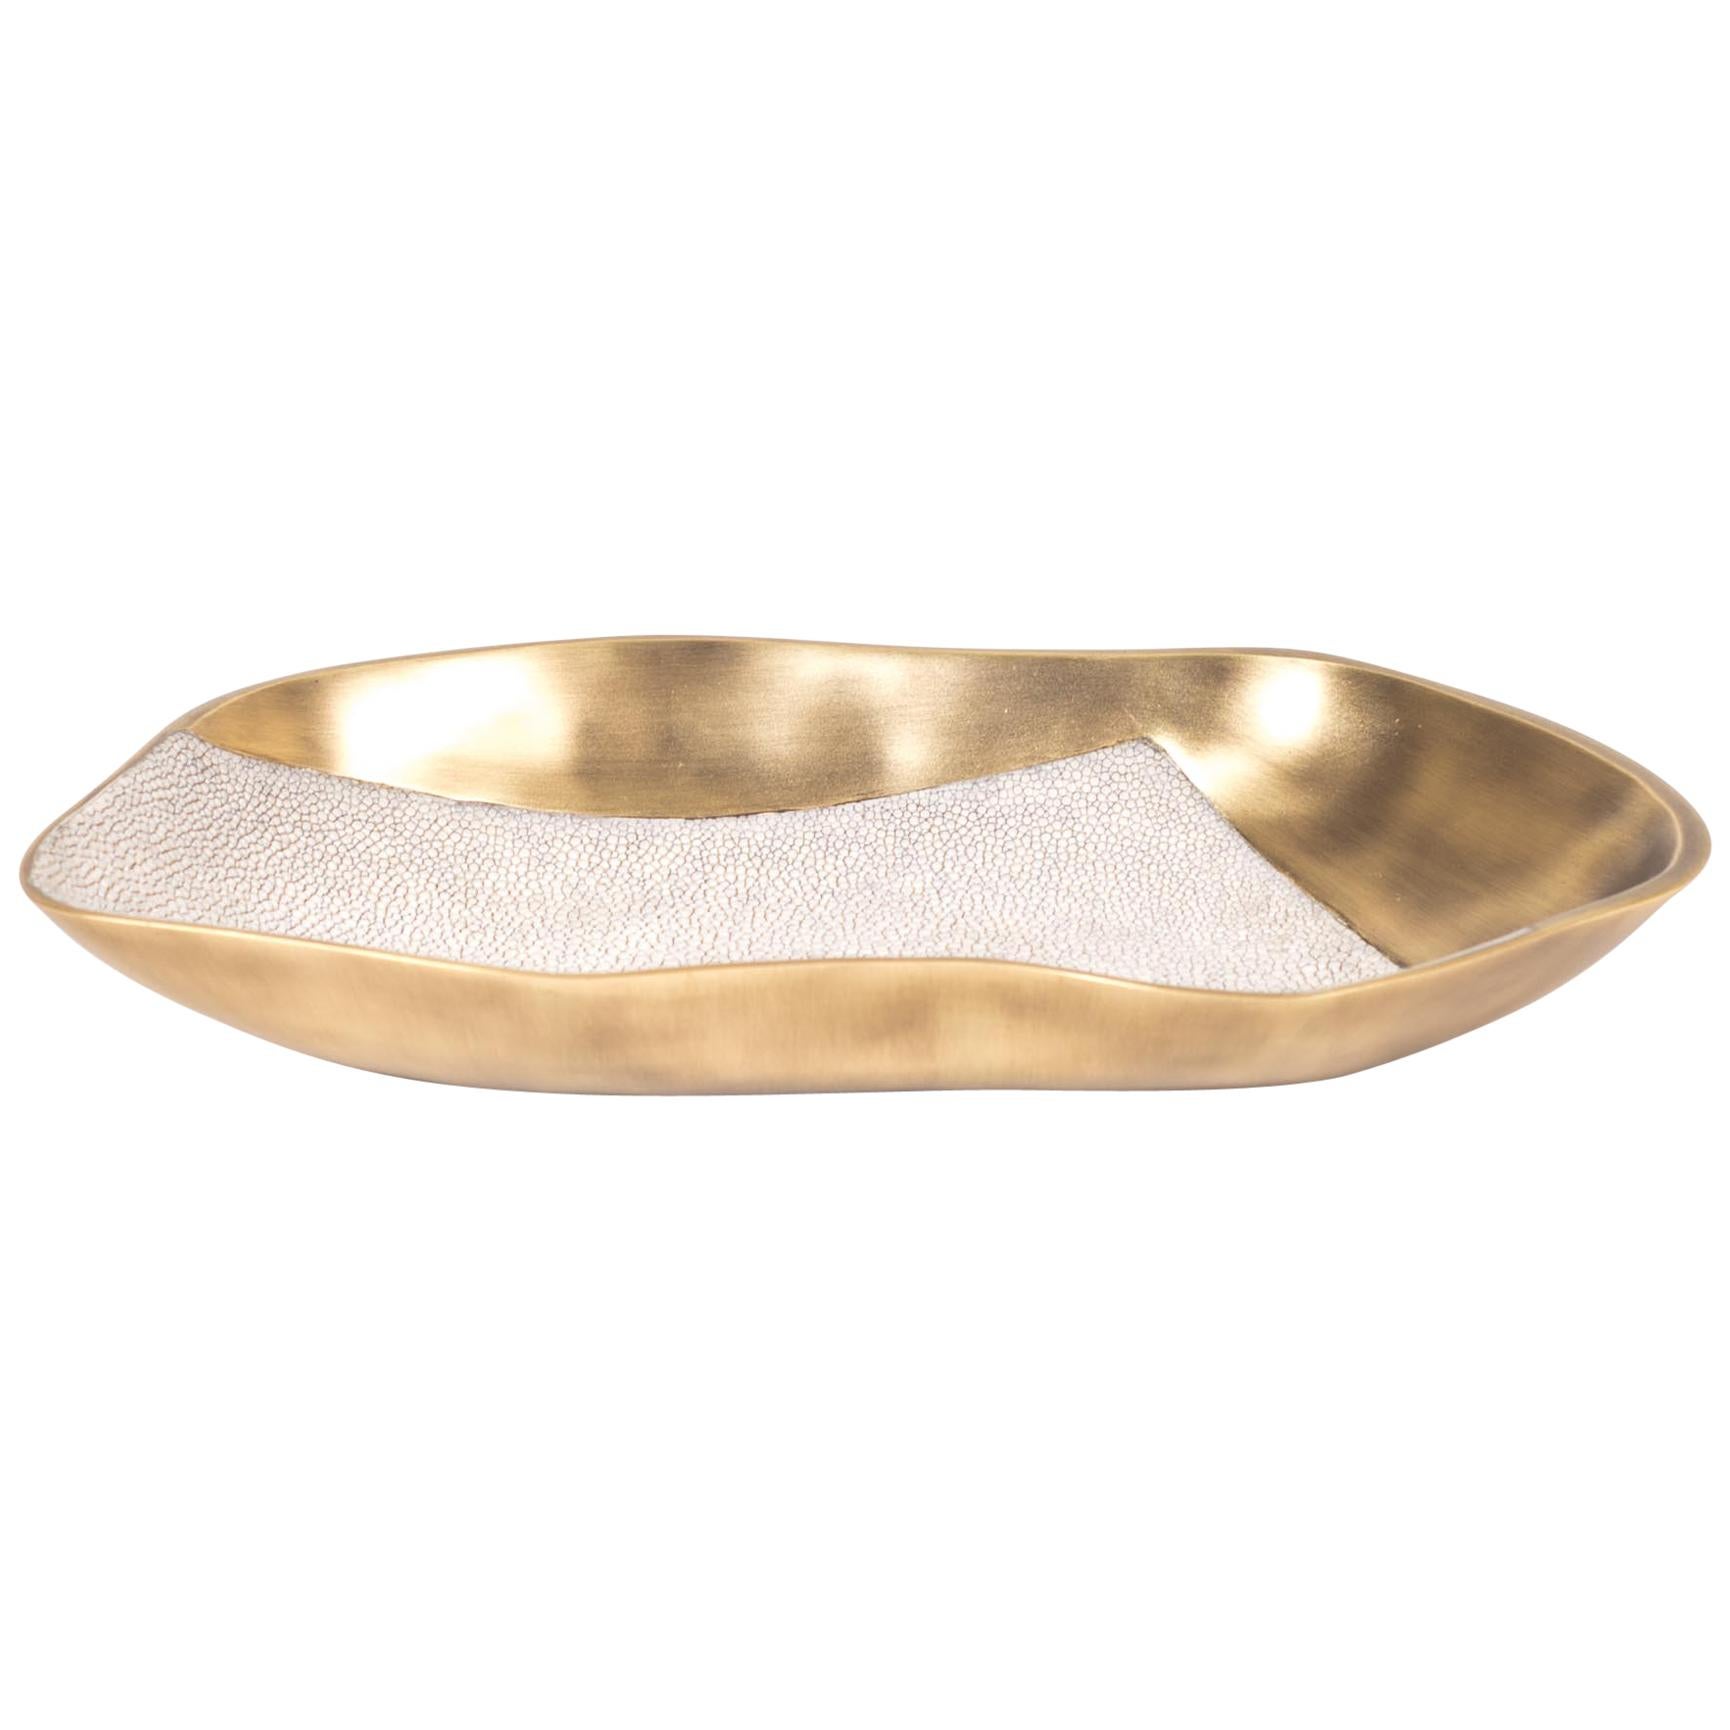 Chital Bowl Small in Cream Shagreen & Bronze-Patina Brass by Kifu Paris